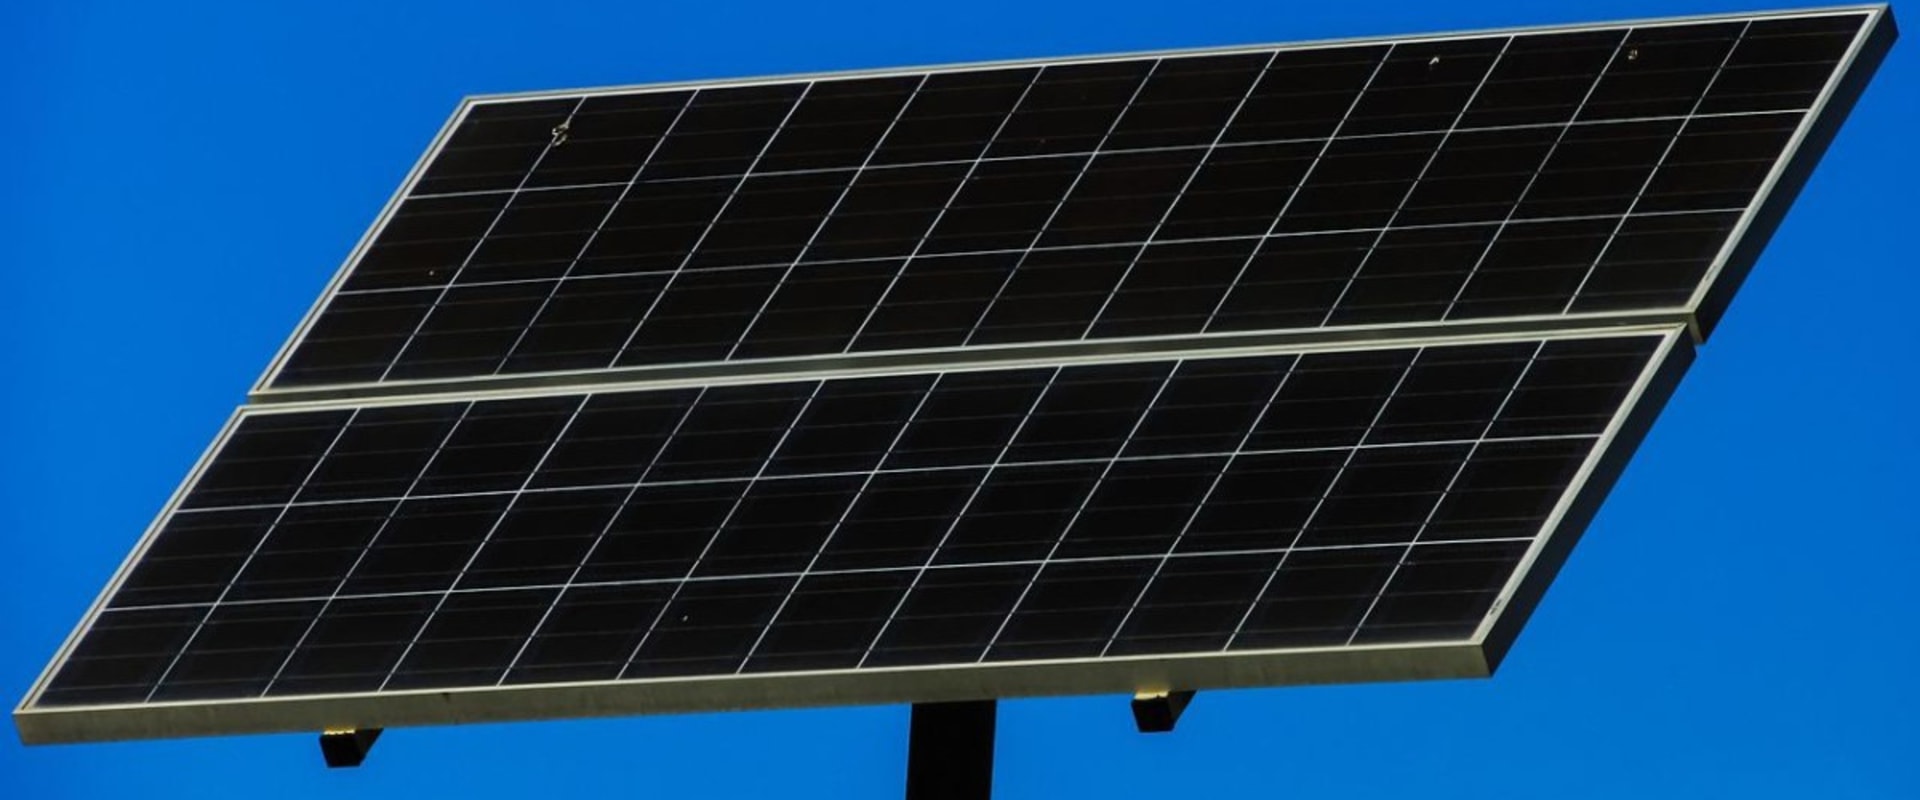 Can a 300 Watt Solar Panel Power a Refrigerator?